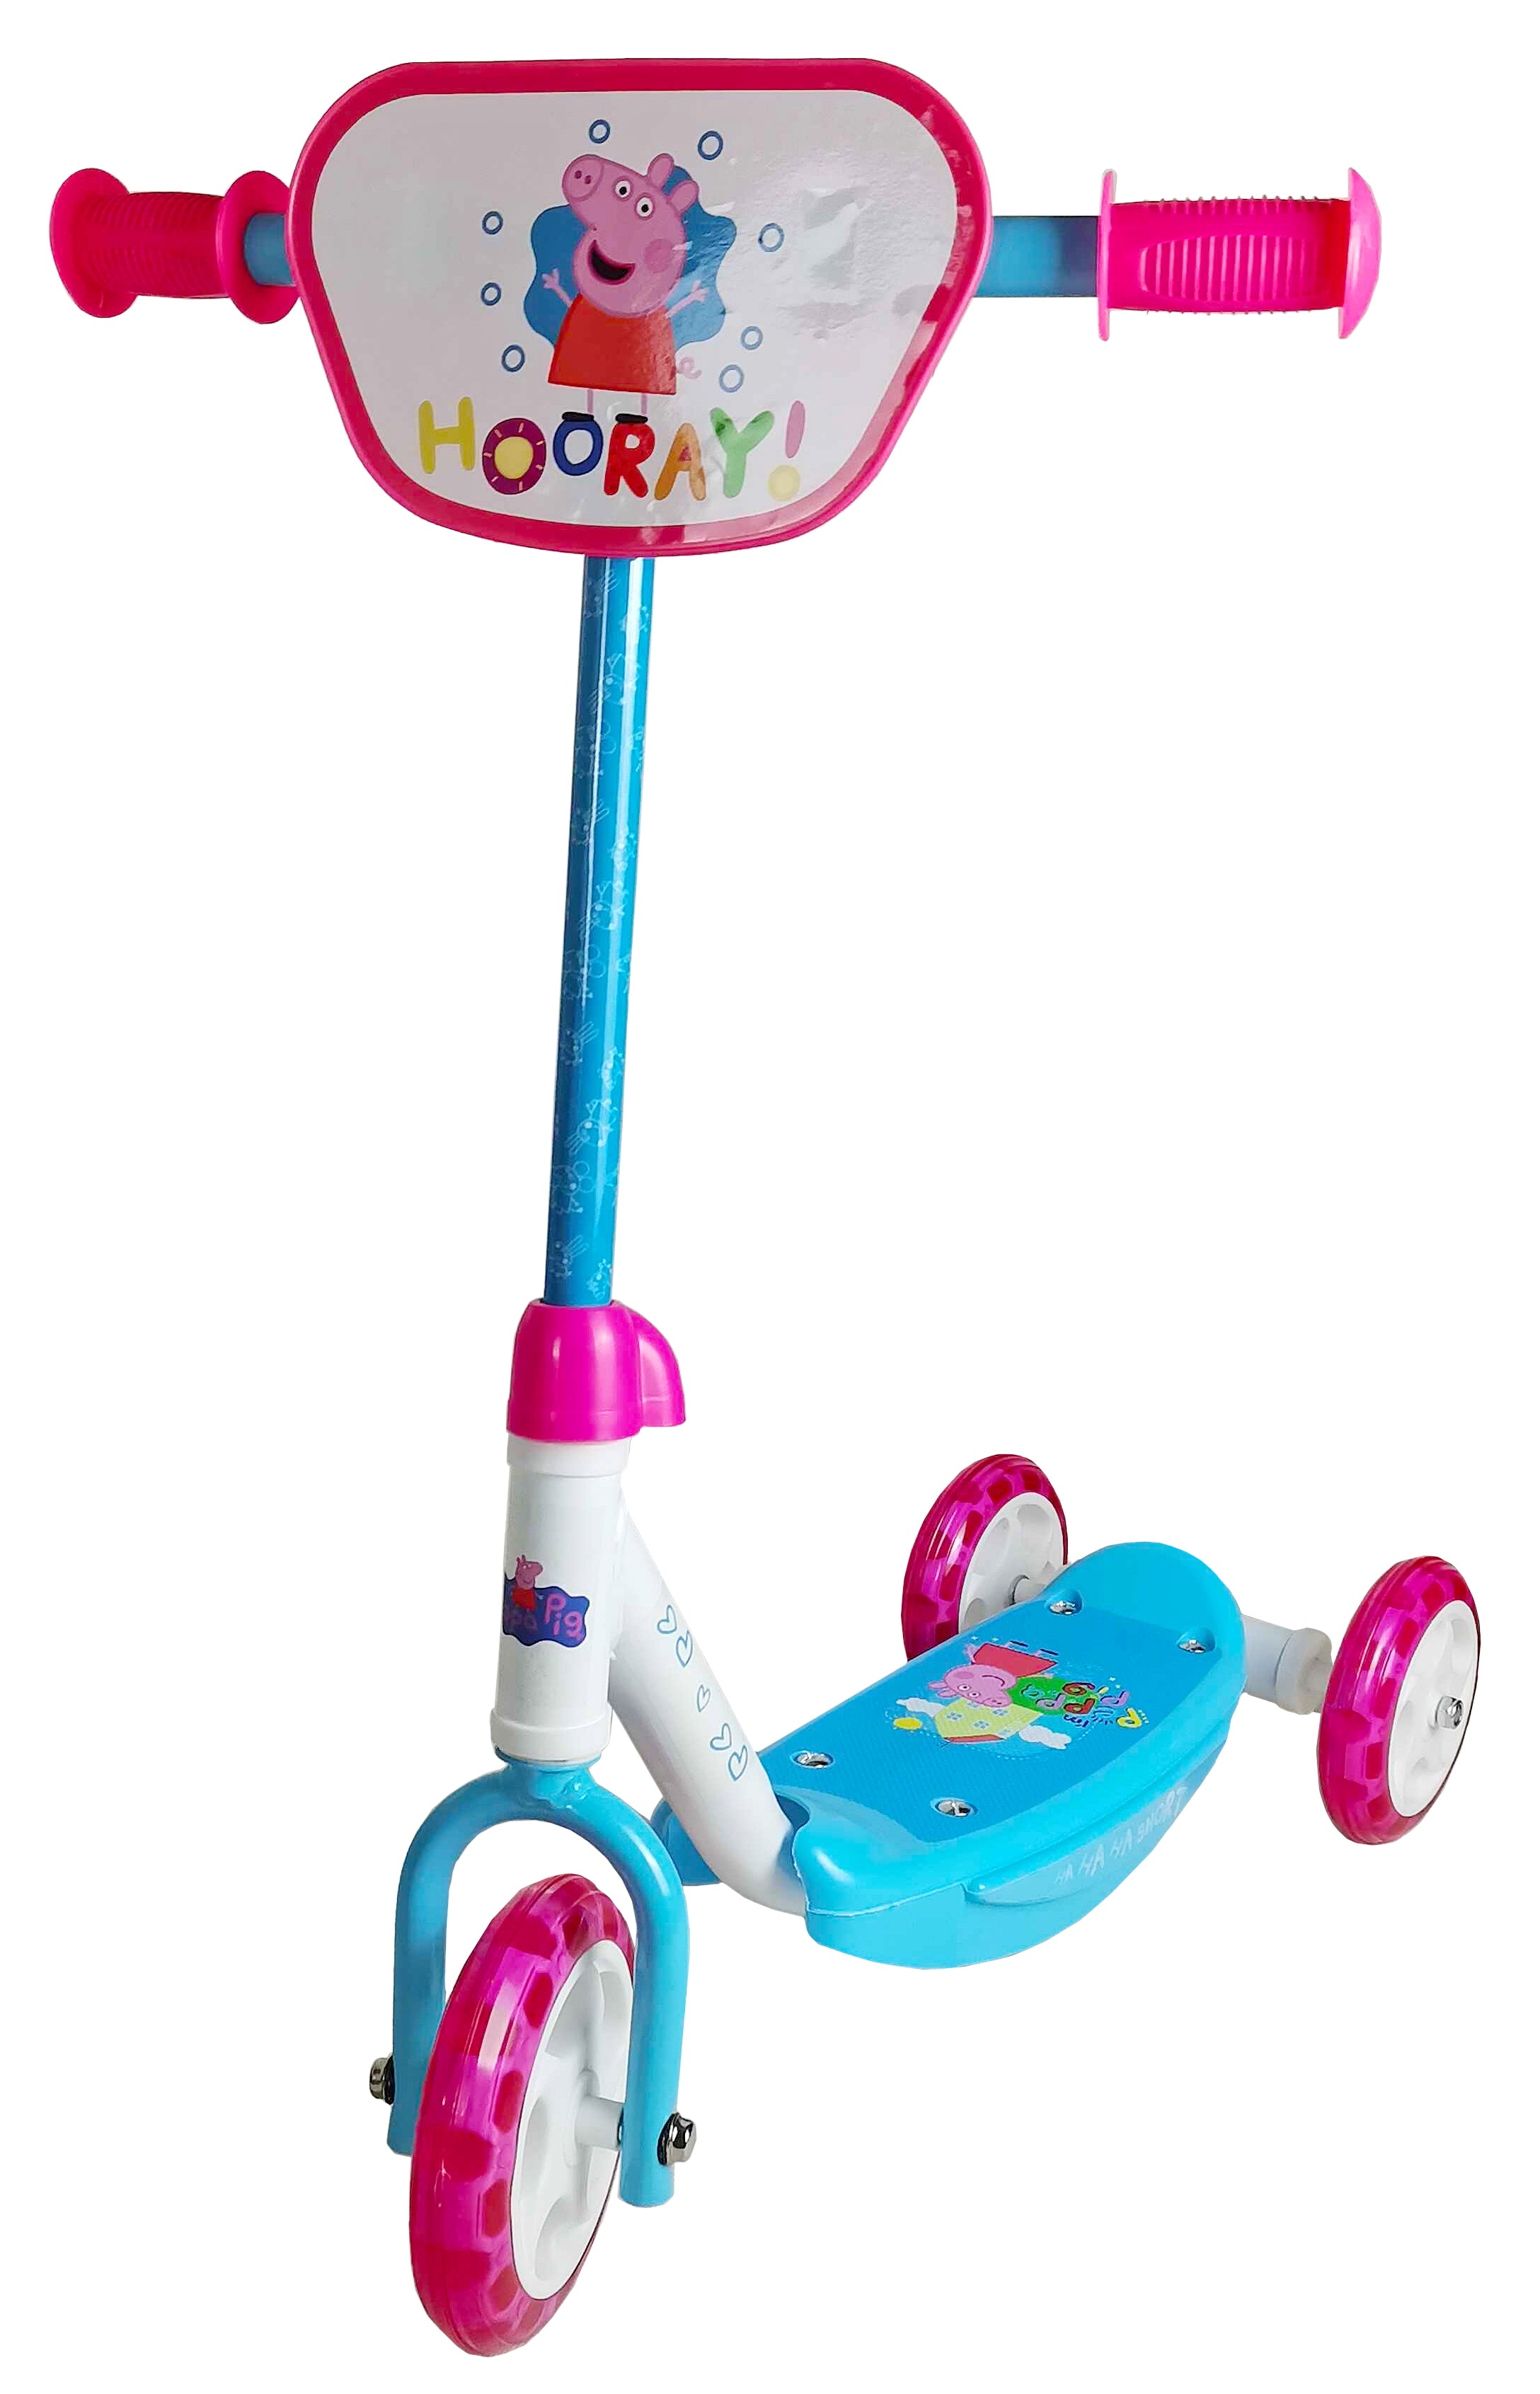 Peppa Pig 3 Wheel Scooter